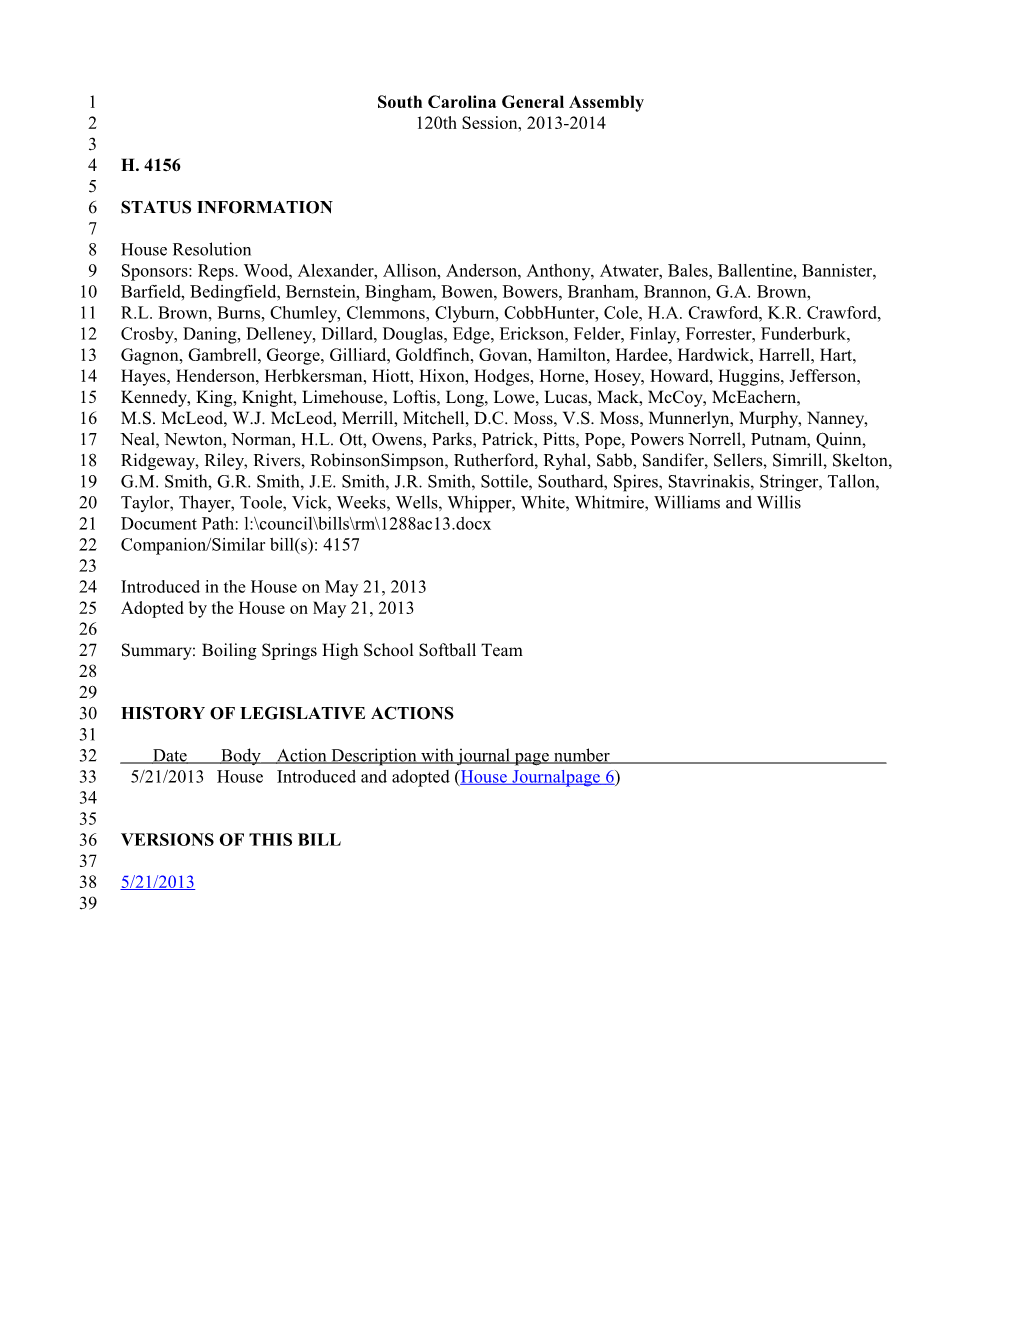 2013-2014 Bill 4156: Boiling Springs High School Softball Team - South Carolina Legislature